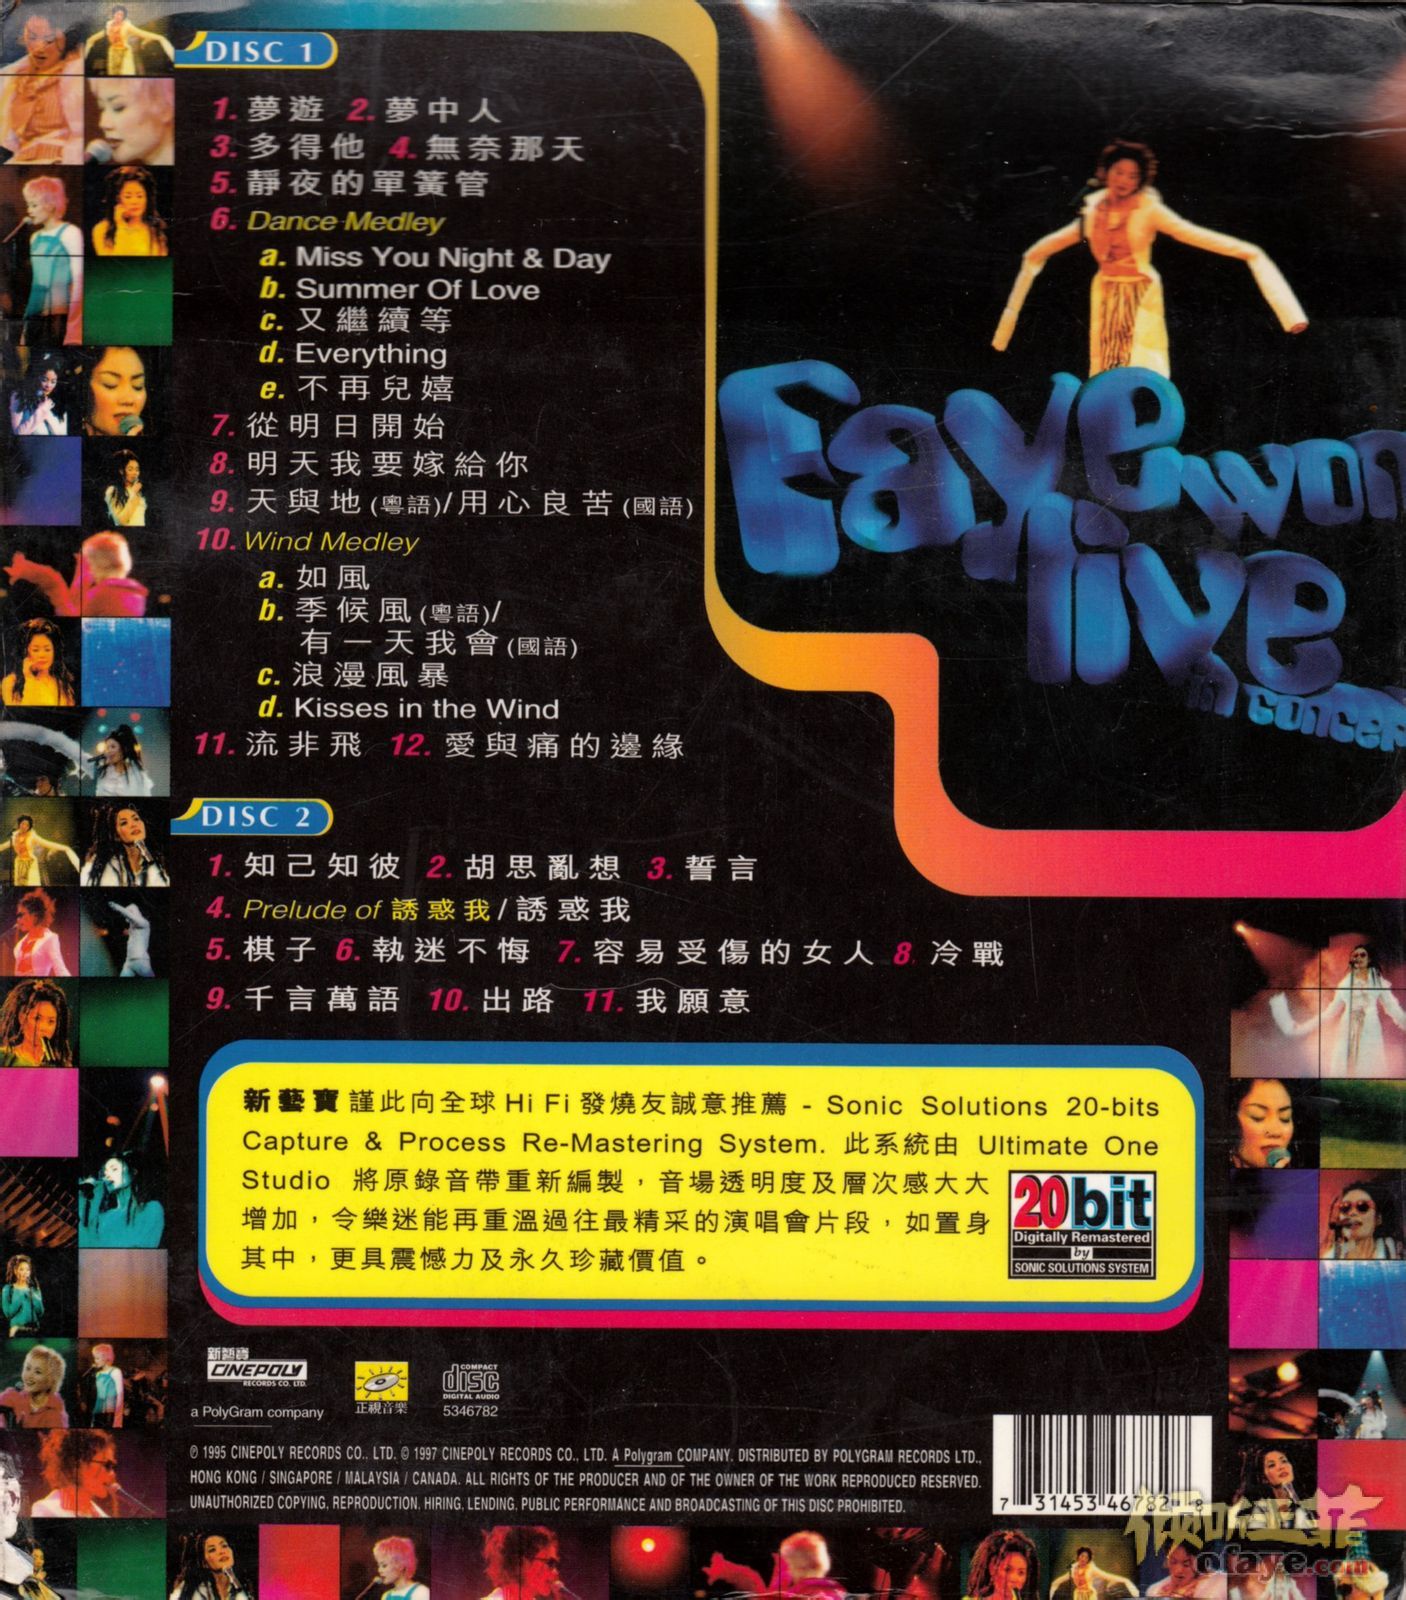 Faye HK Scenic Tour 98-99 (唱游大世界香港演唱会)》- 王菲的专辑 - Apple Music